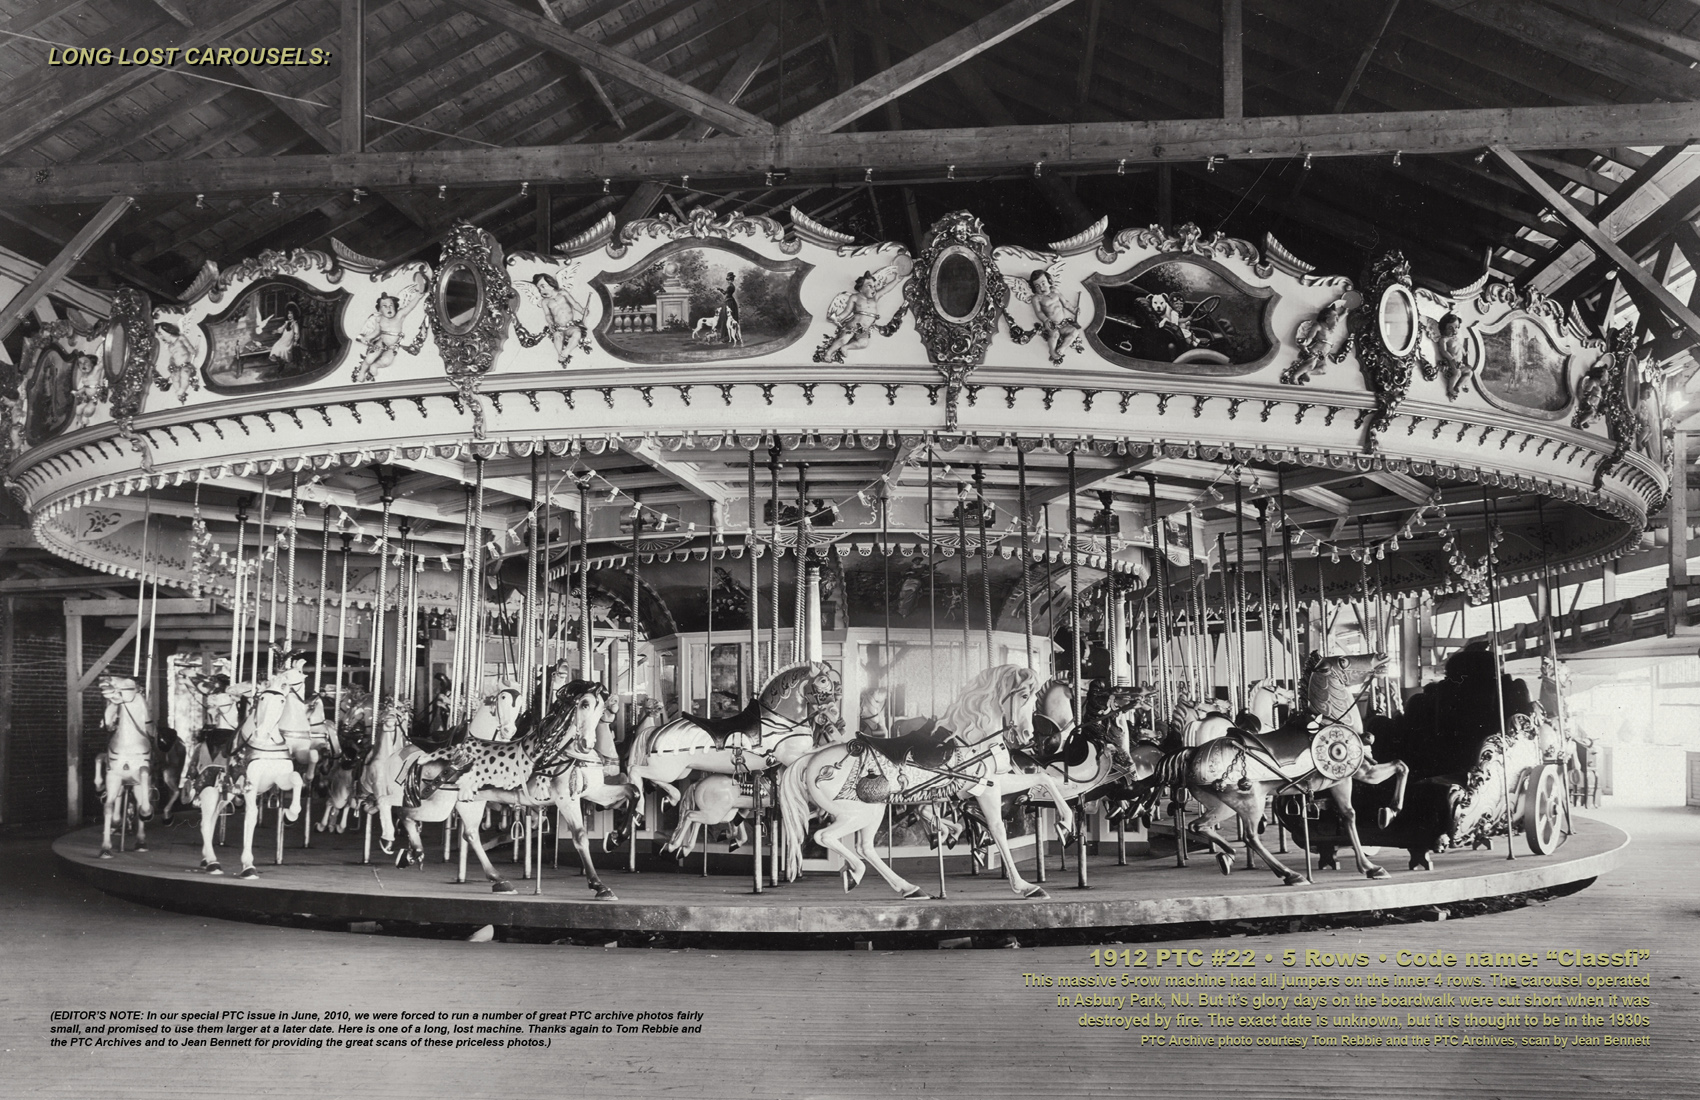 1912-PTC-22-Asbury-park-carousel-lost-CNT-center-Feb-13